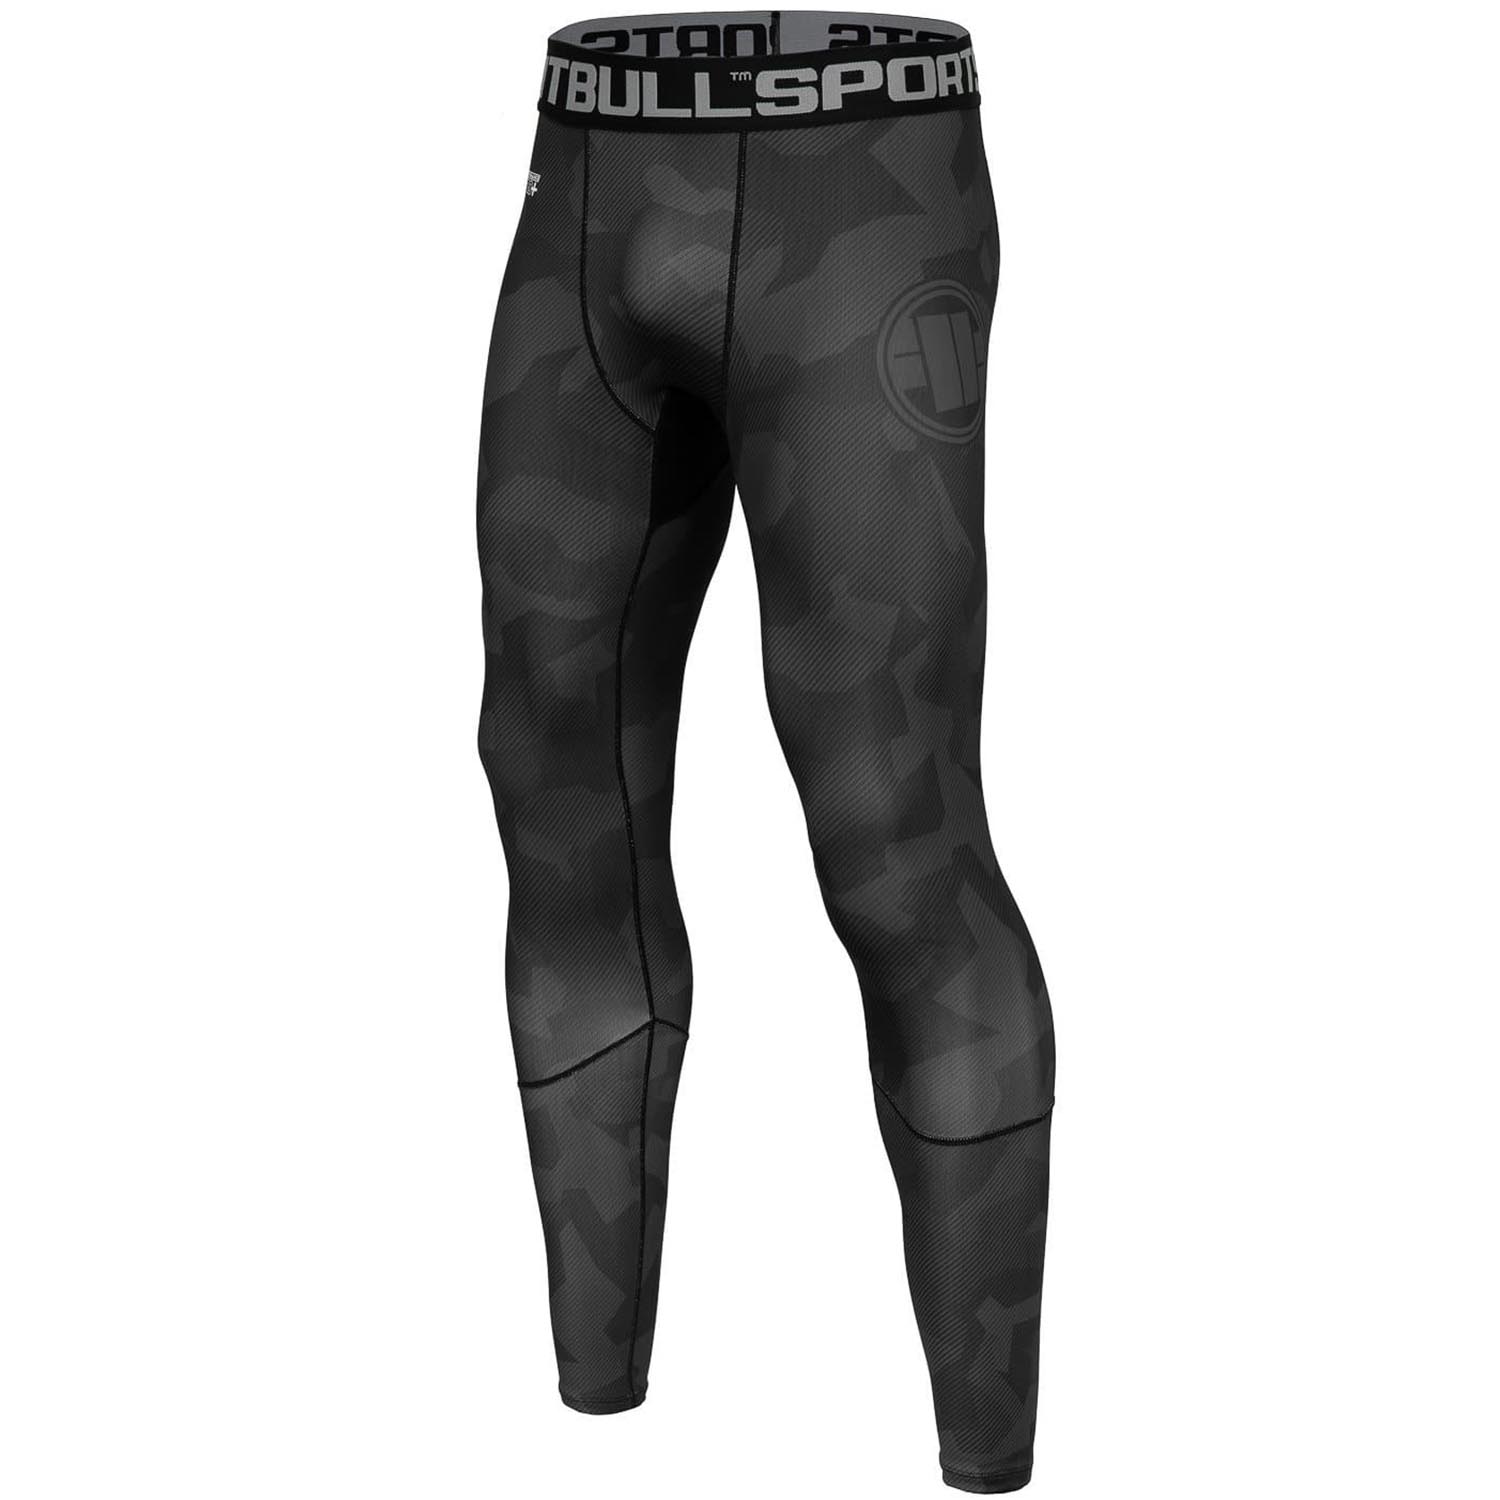 Pit Bull West Coast Compression Pants, Dillard, camo-schwarz